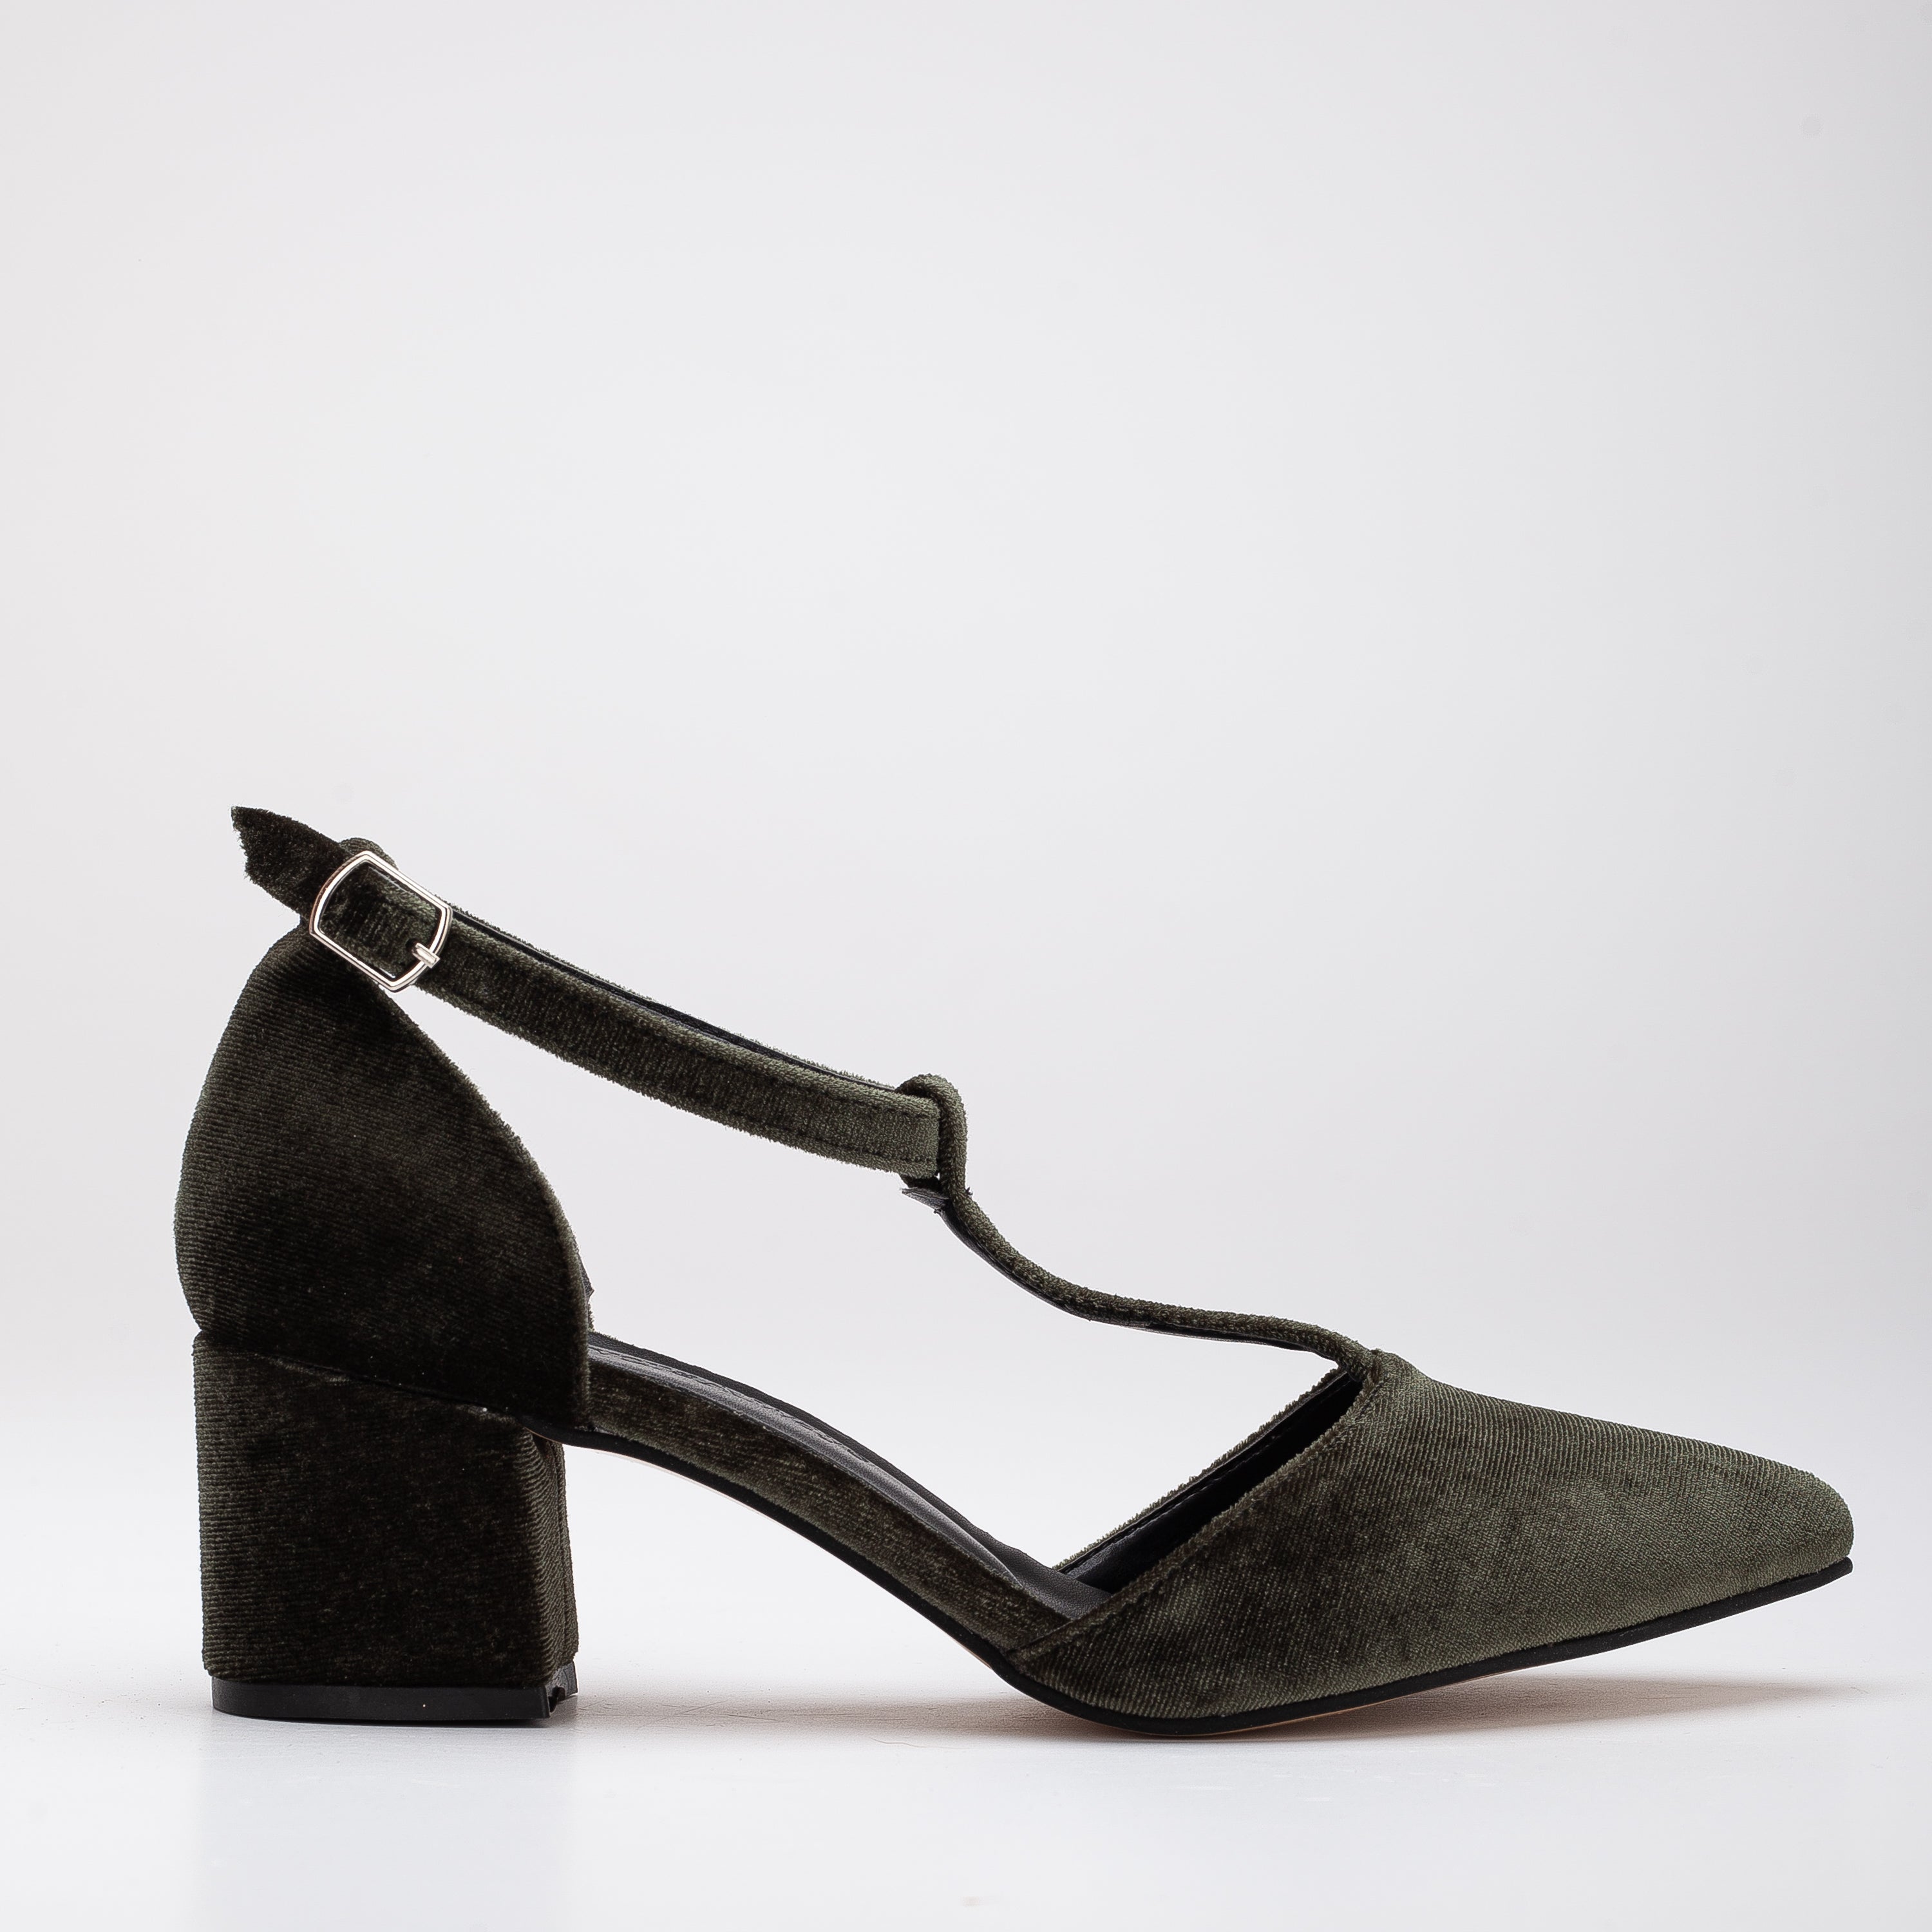 6cm Fashion New Thin High Heels Flock Pumps Pointed Toe with Rhinestone  Elegant Khaki Shoes for Women 41 42 43 - AliExpress